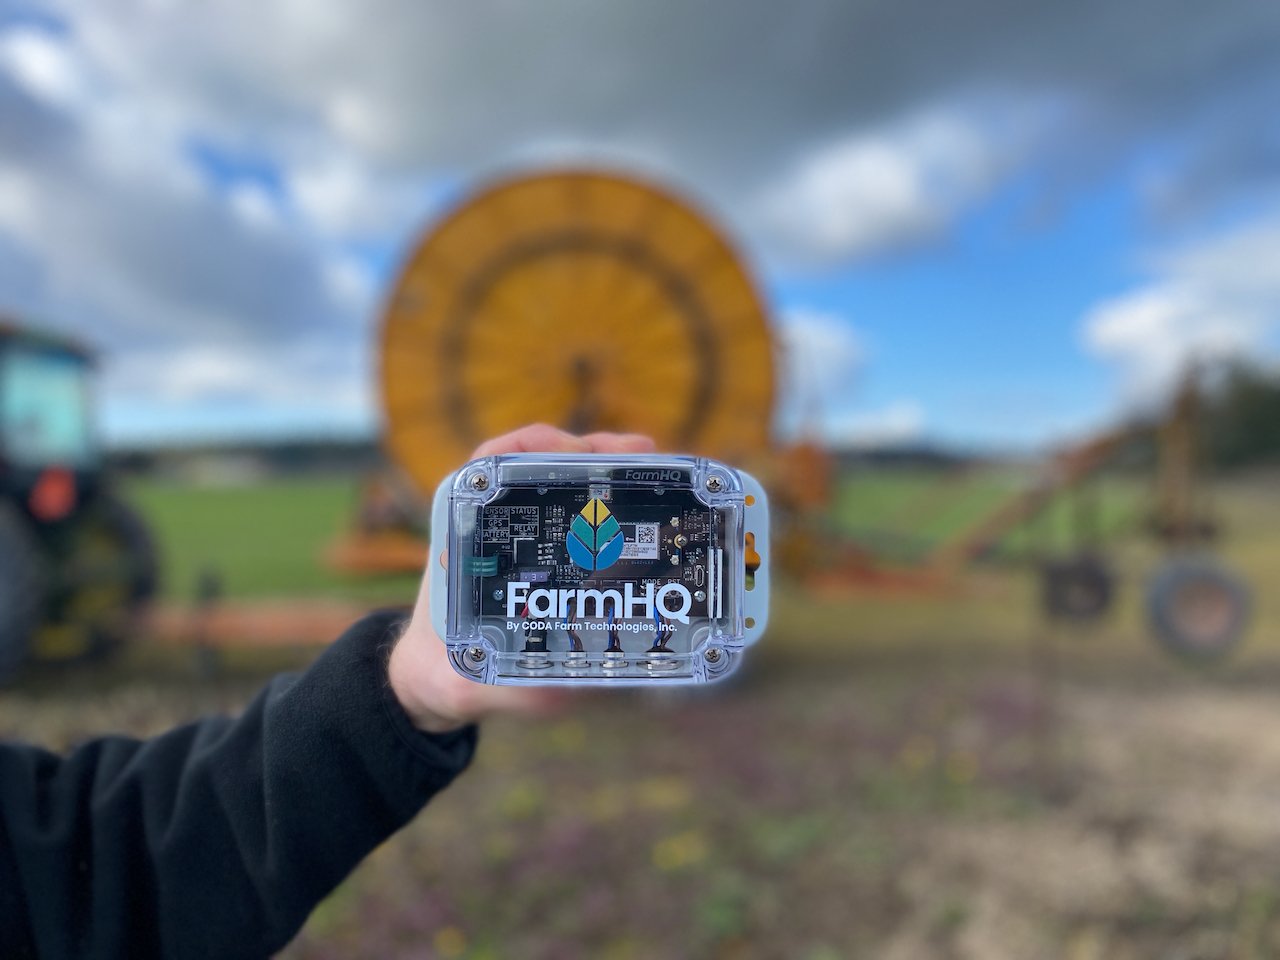 FarmHQ: Remote Irrigation Control and Monitoring